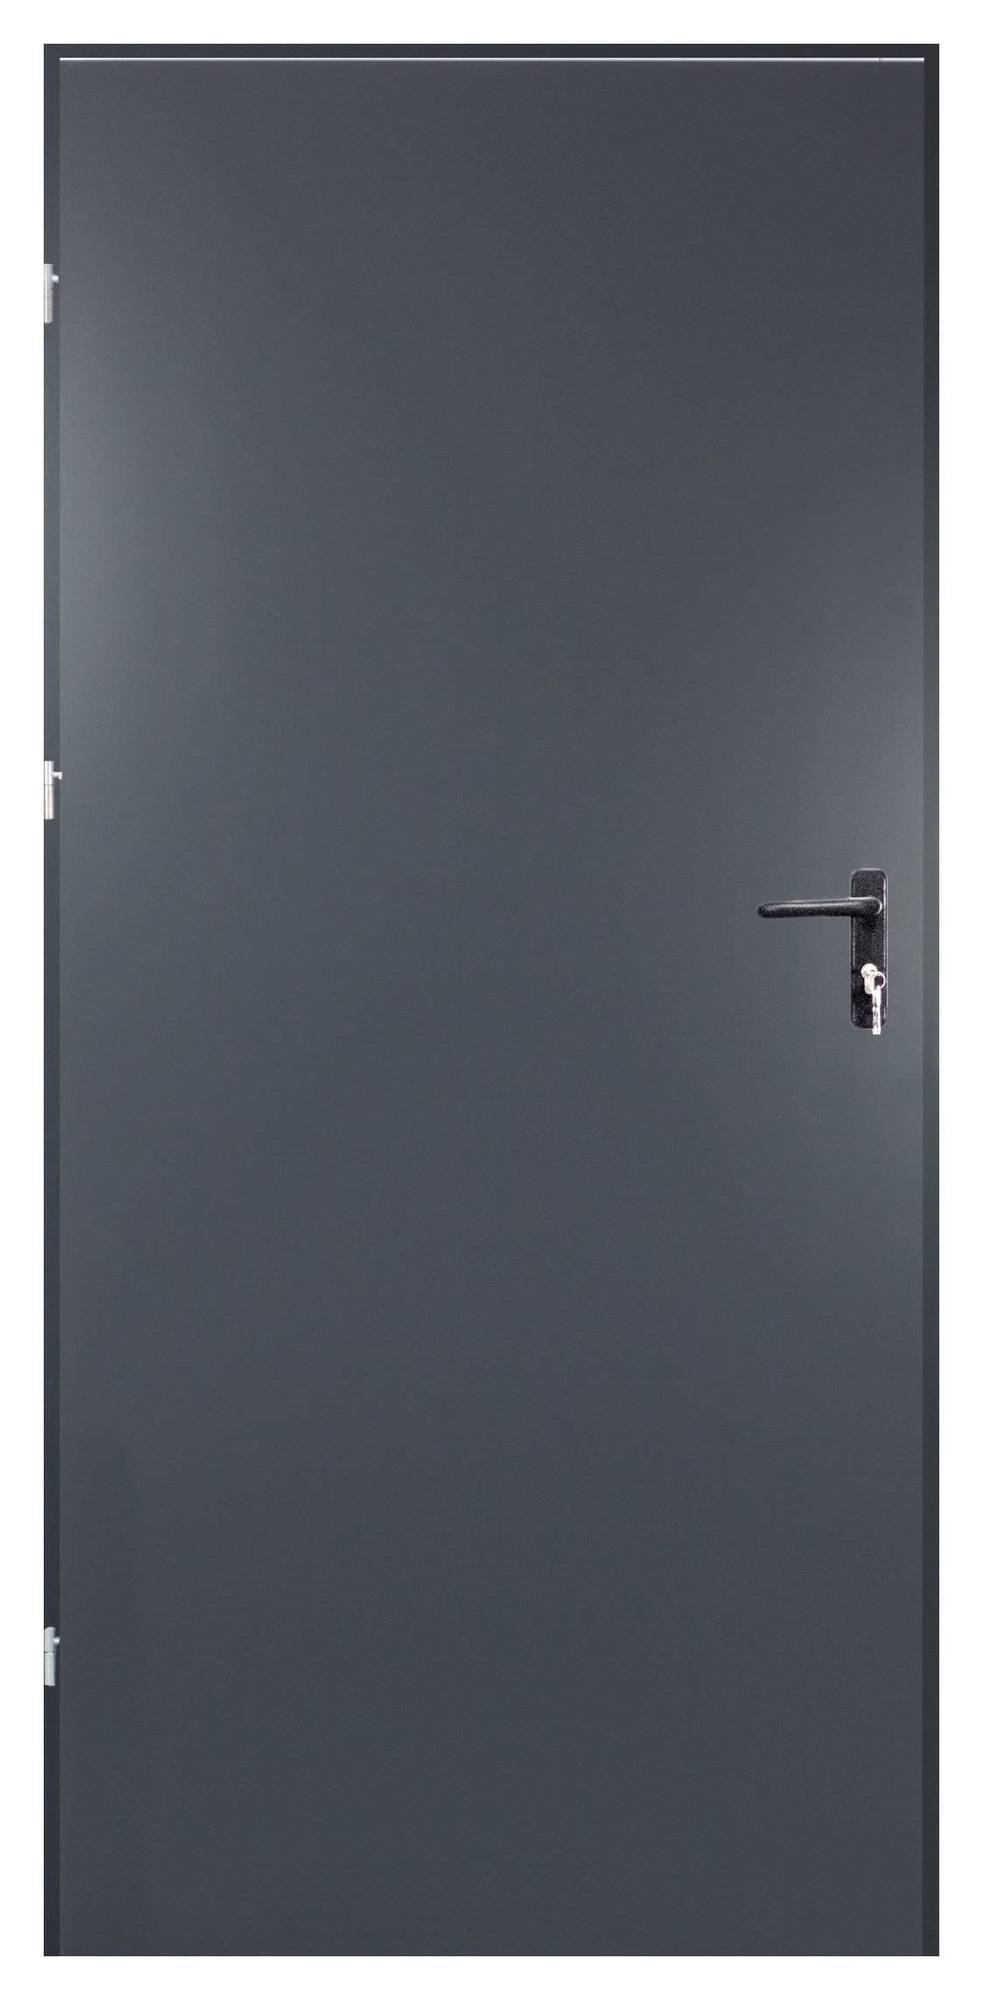 Plieninės durys RADEX TECHNIK DIN RT02, antracito sp., 892 x 1995 mm, universalios